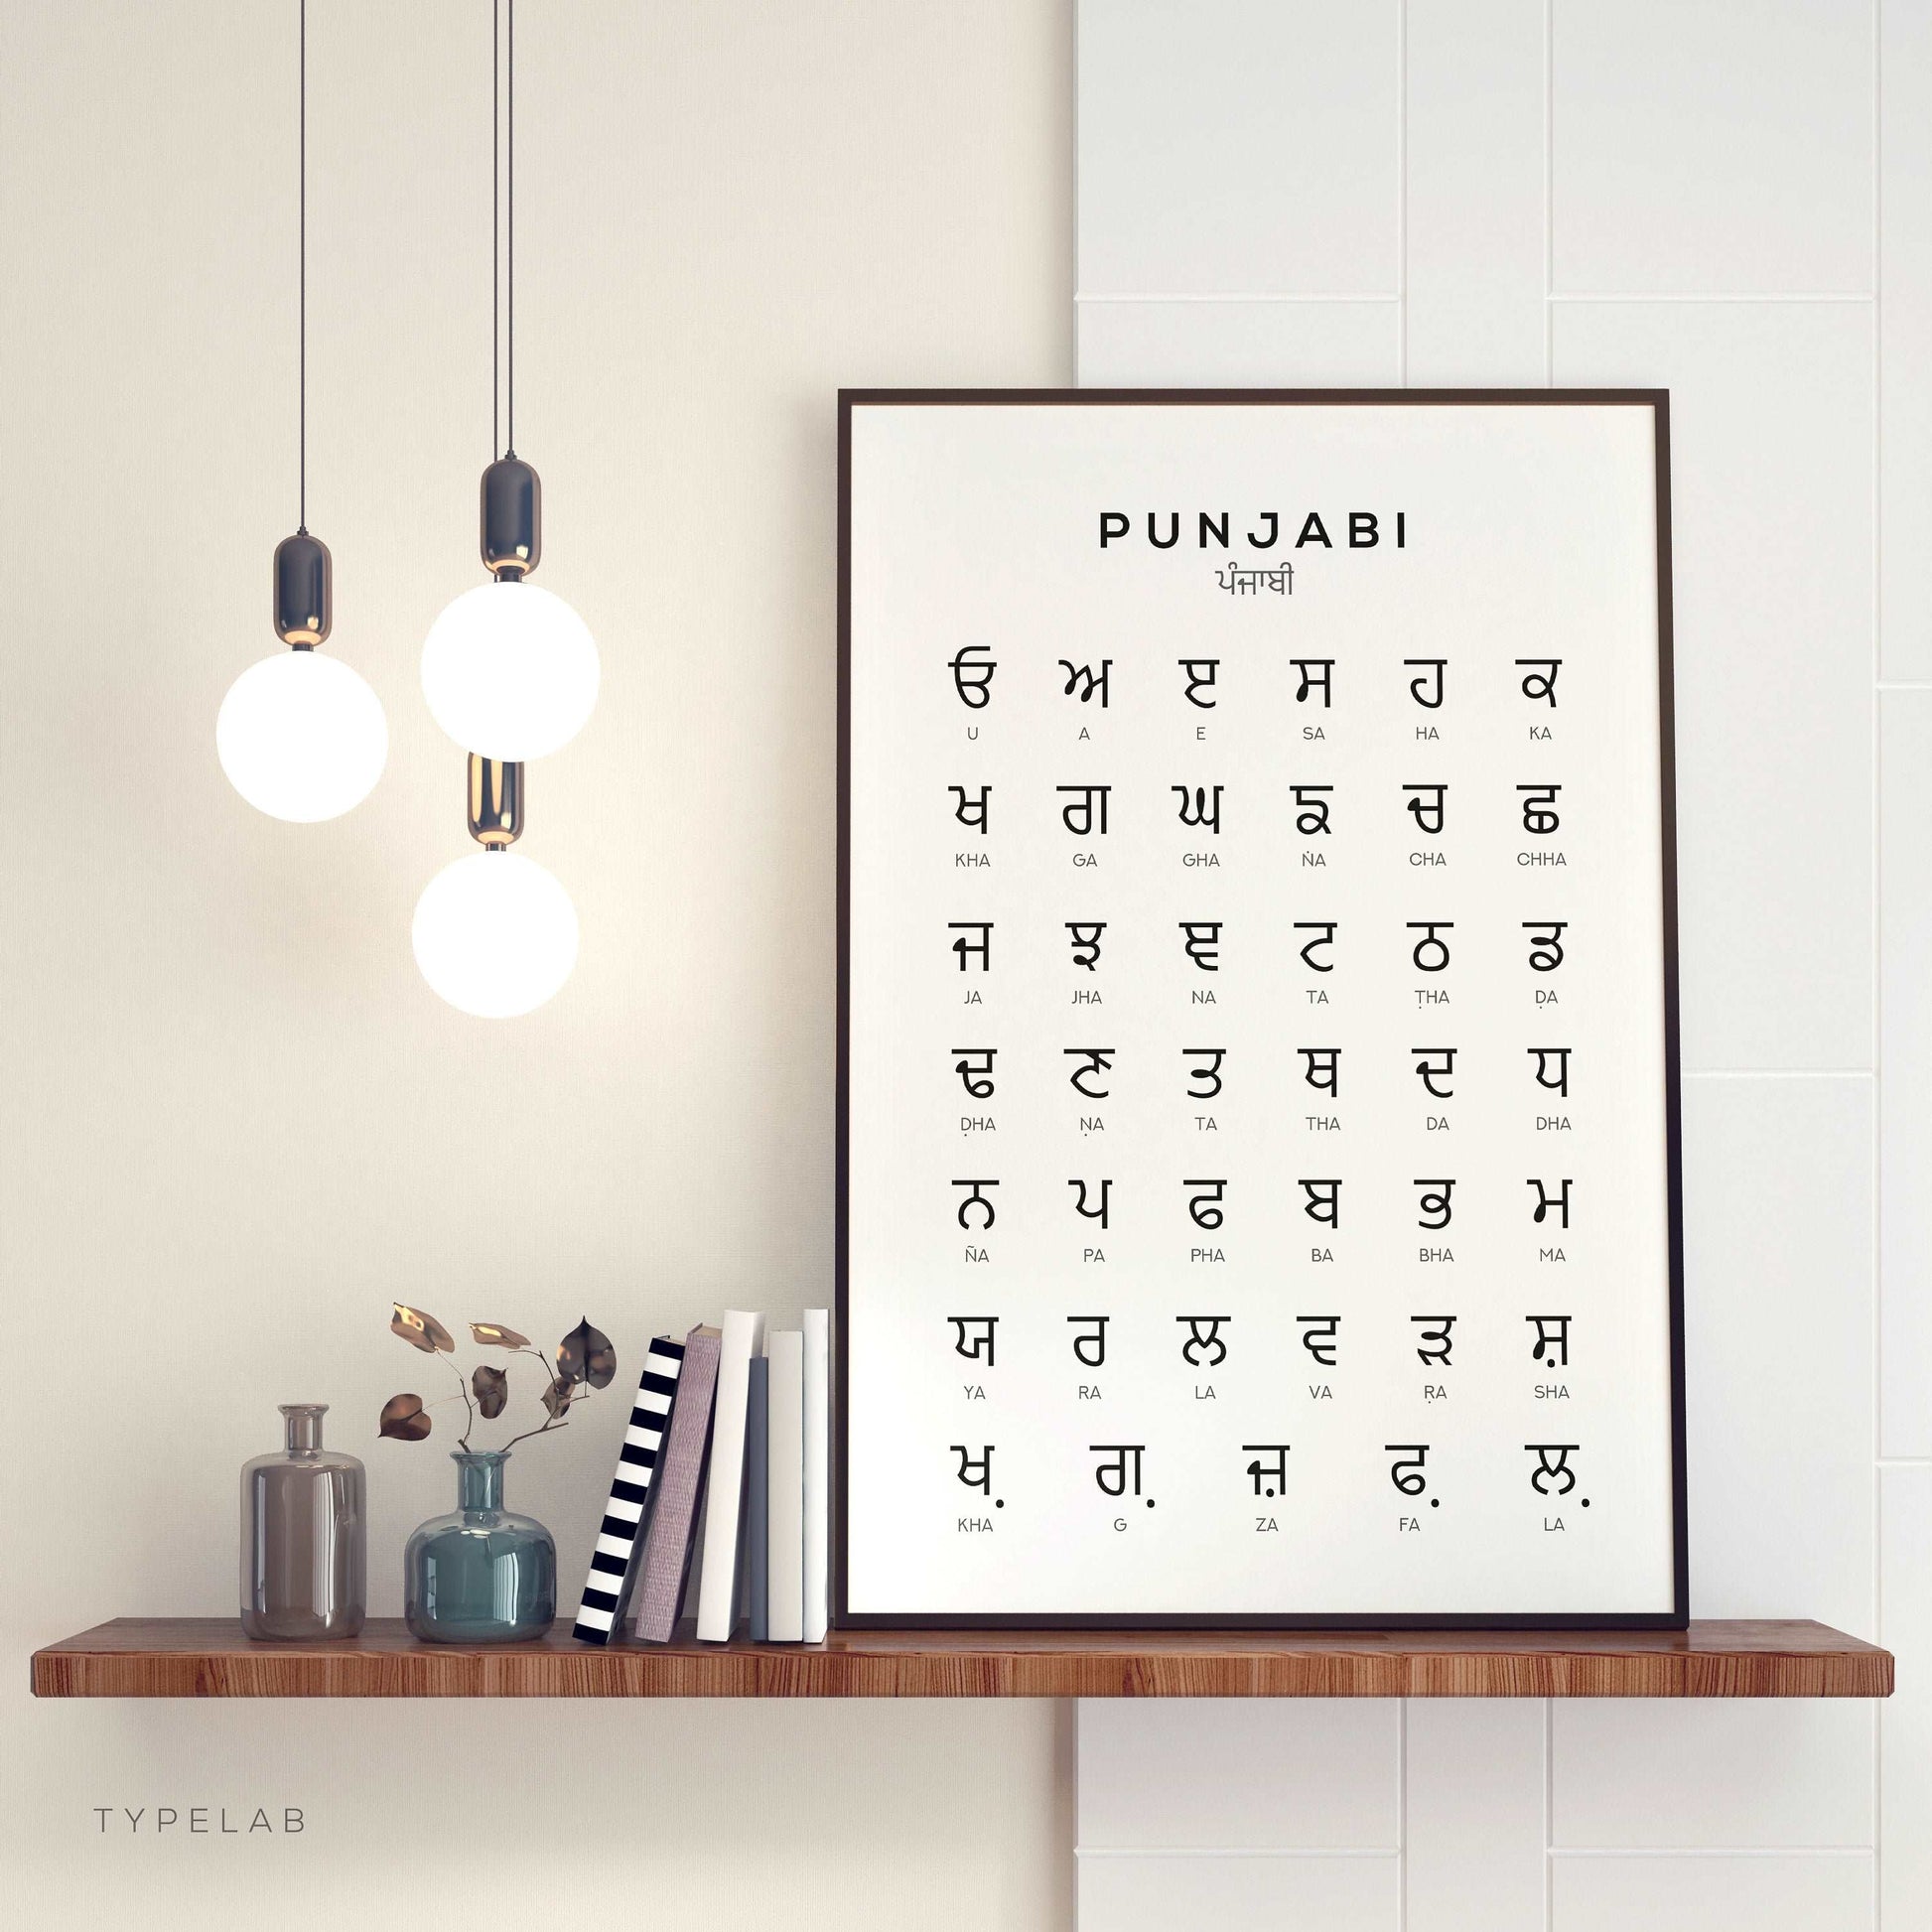 Punjabi Alphabet Print, Language Learning Wall Art Typelab